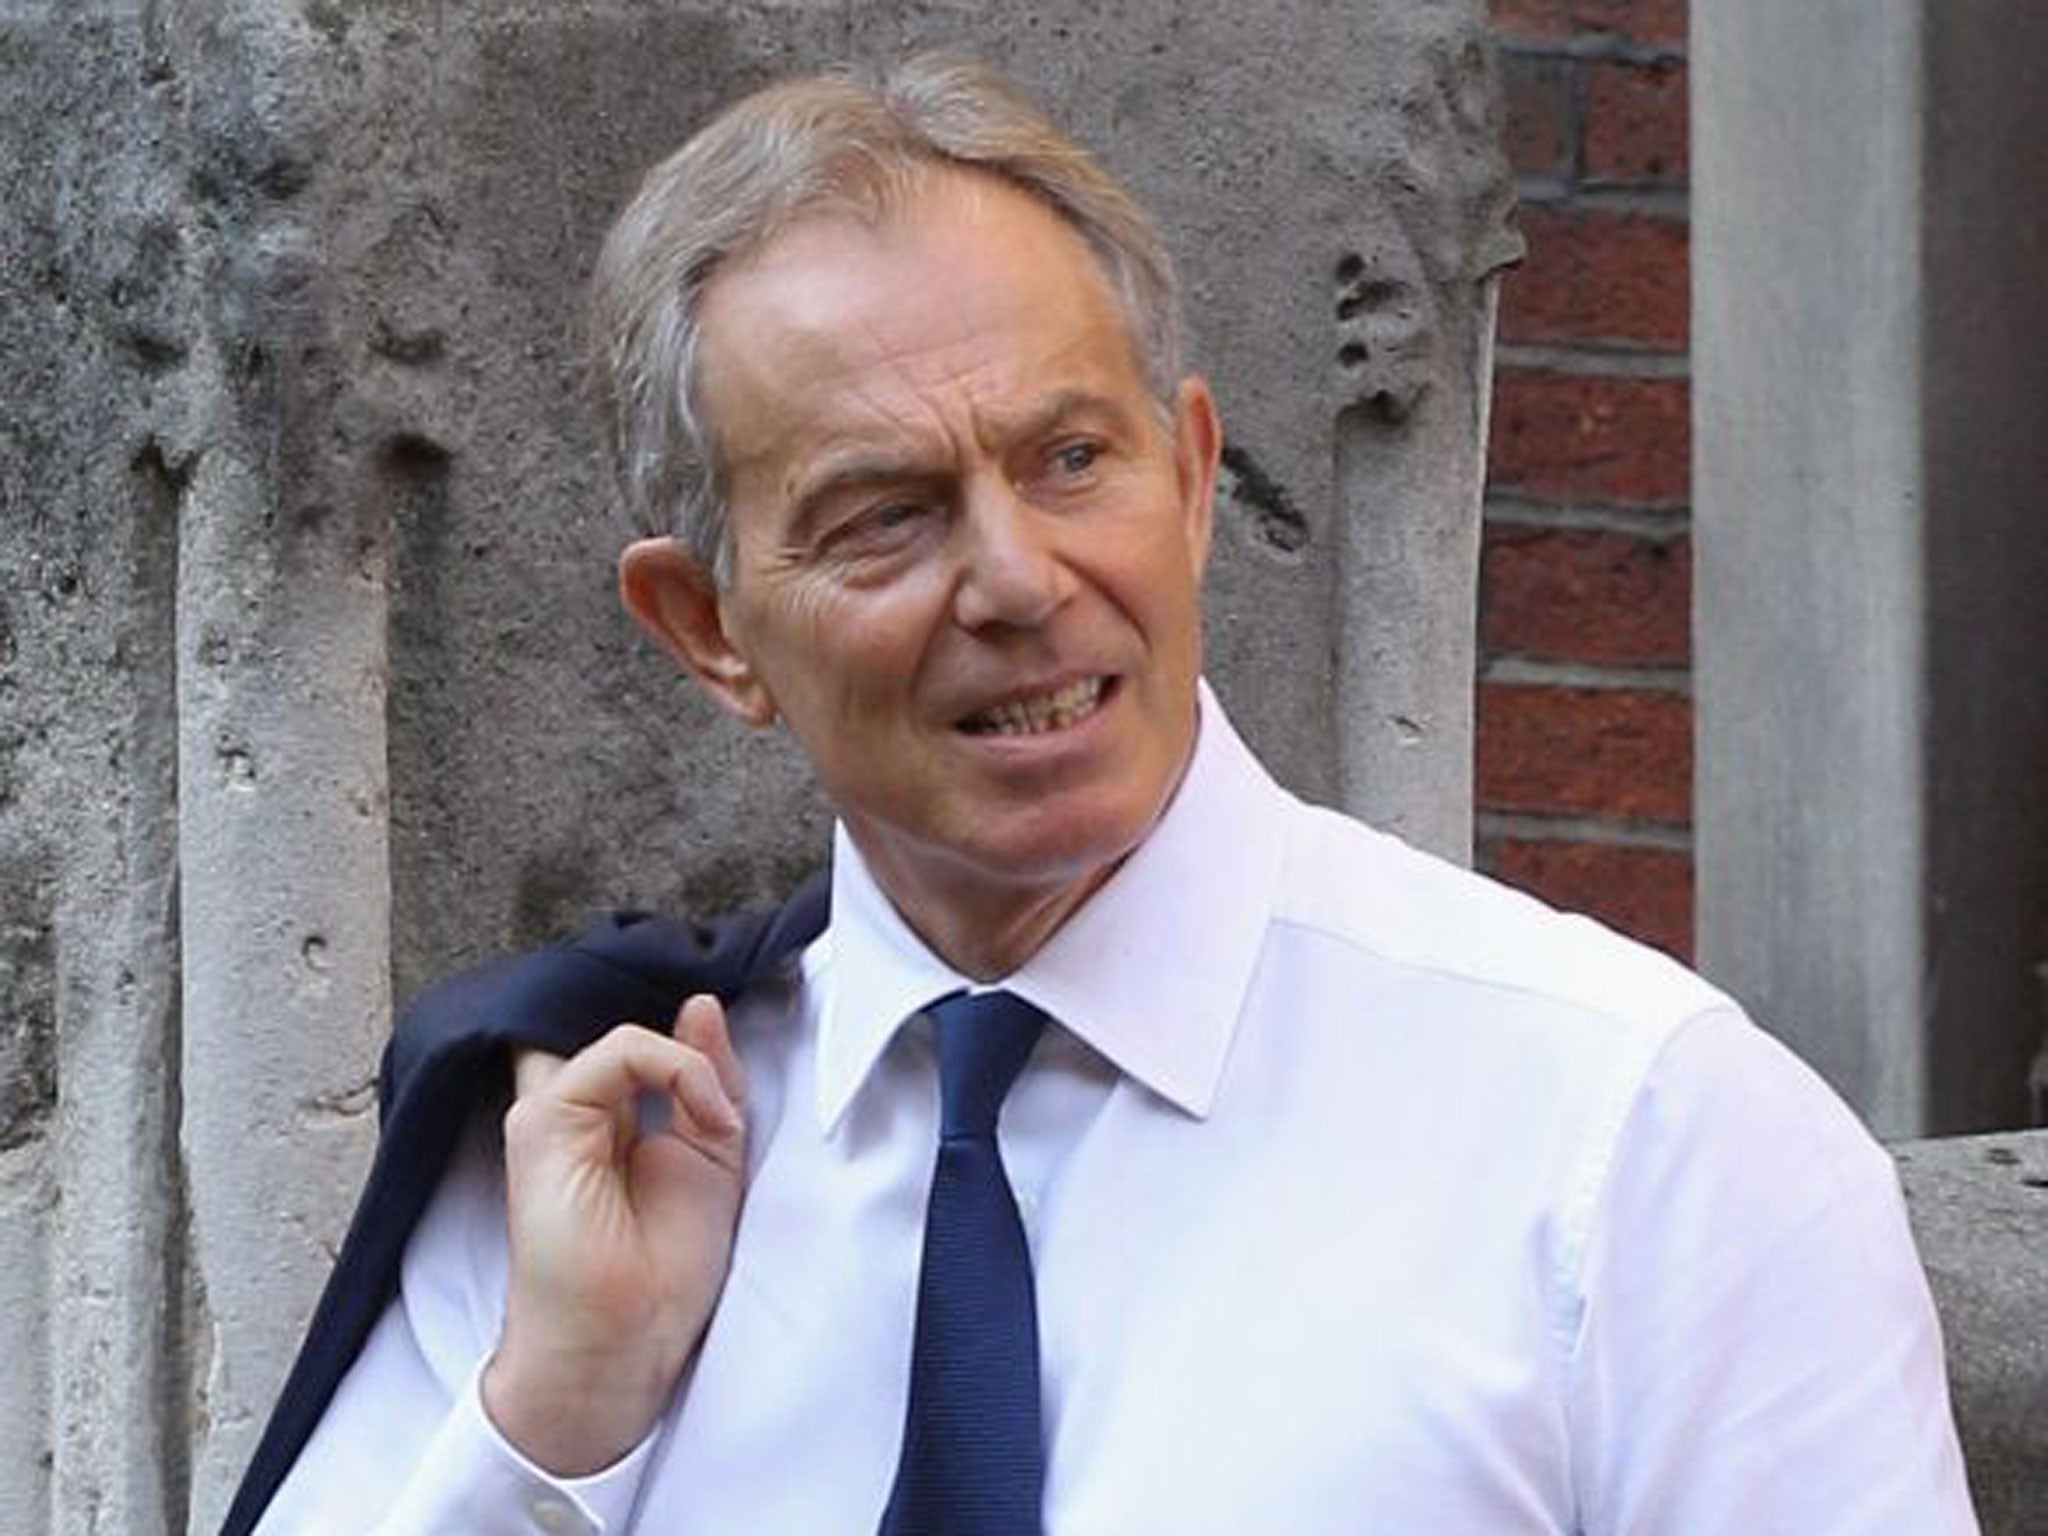 Ol’ blue eyes: former PM Tony Blair